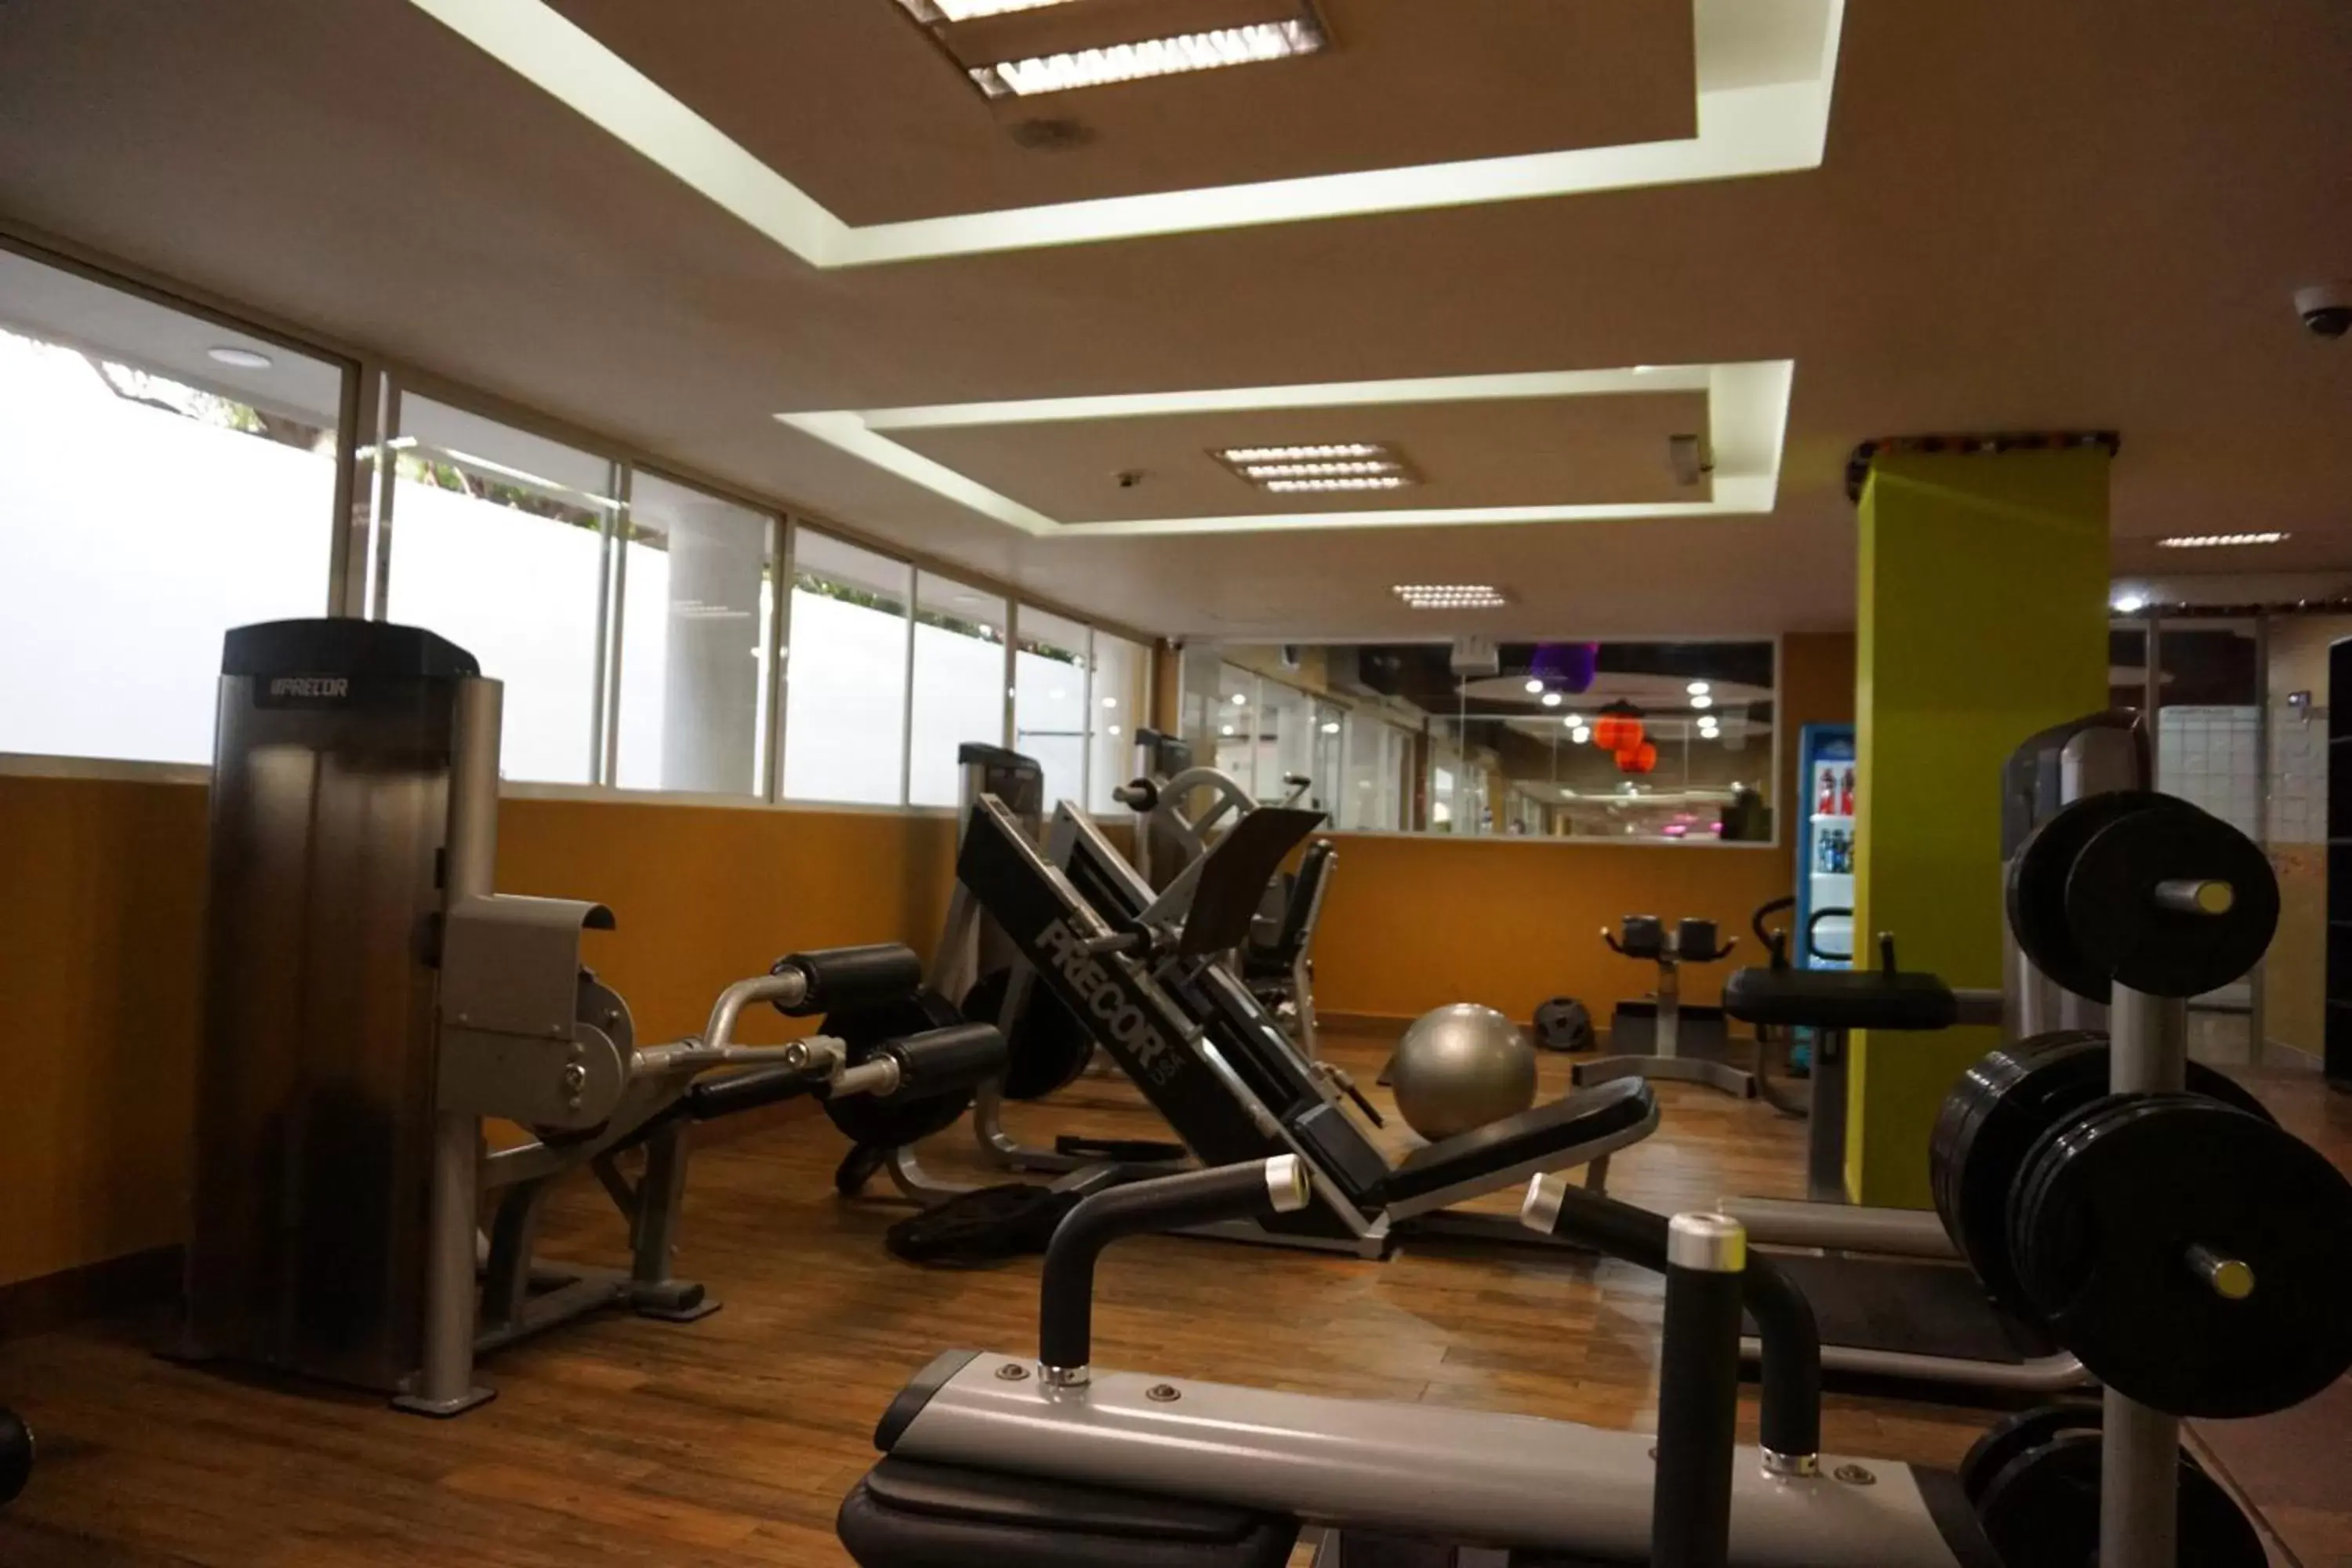 Fitness centre/facilities, Fitness Center/Facilities in Hotel Black Mexico City